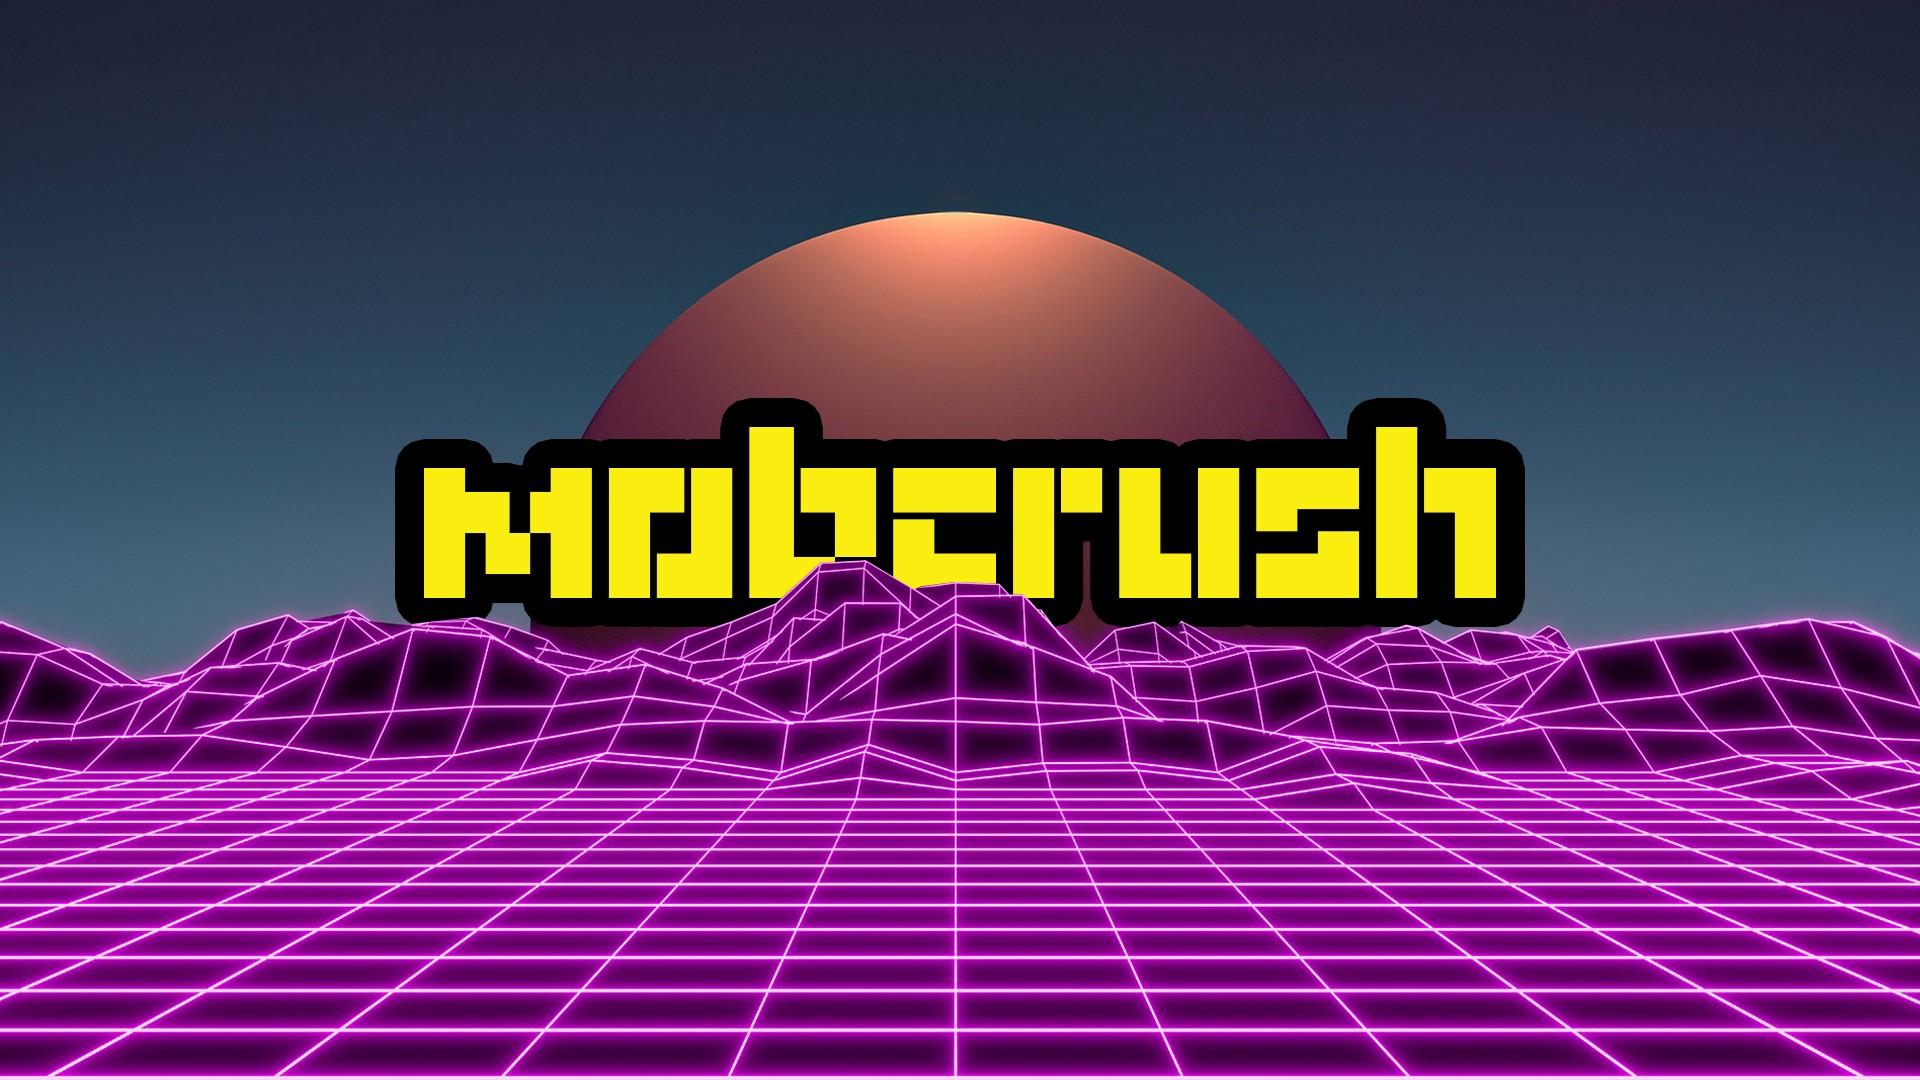 Mobcrush Logo - What's up with Mobcrush in 2018? - Mobcrush Blog